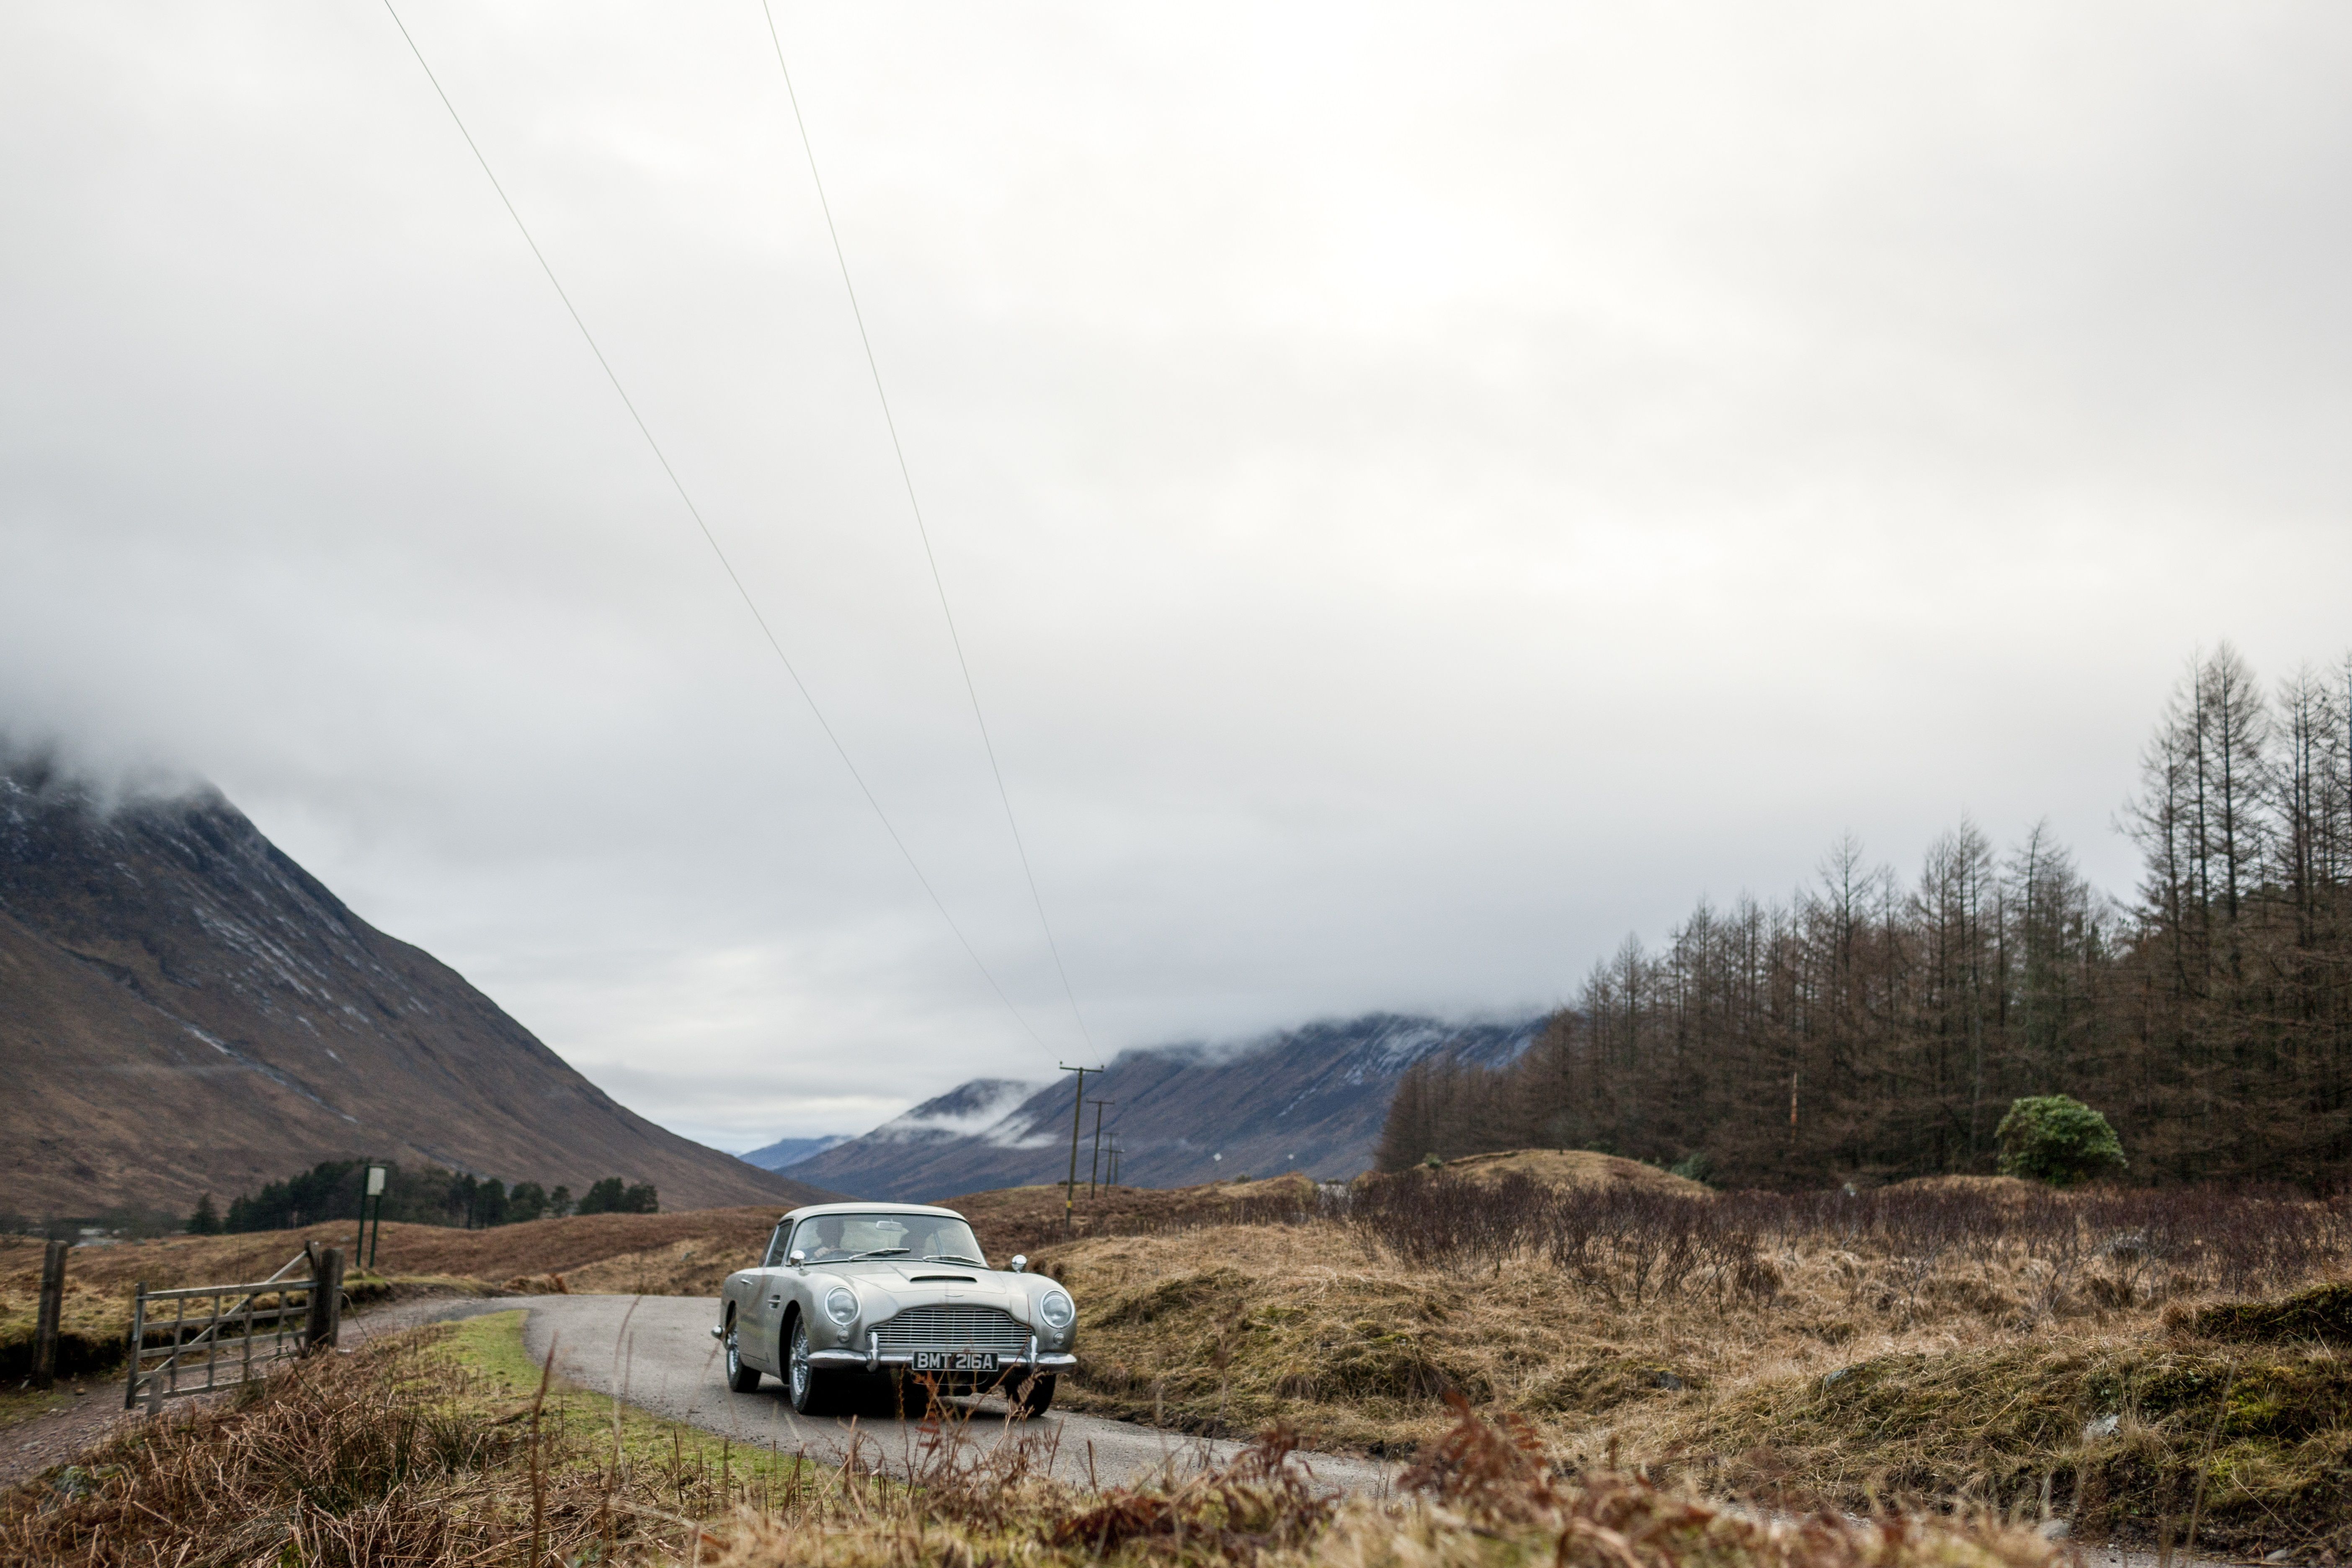 Aston Martin DB5 en la película de James Bond "Skyfall" - EON Productions